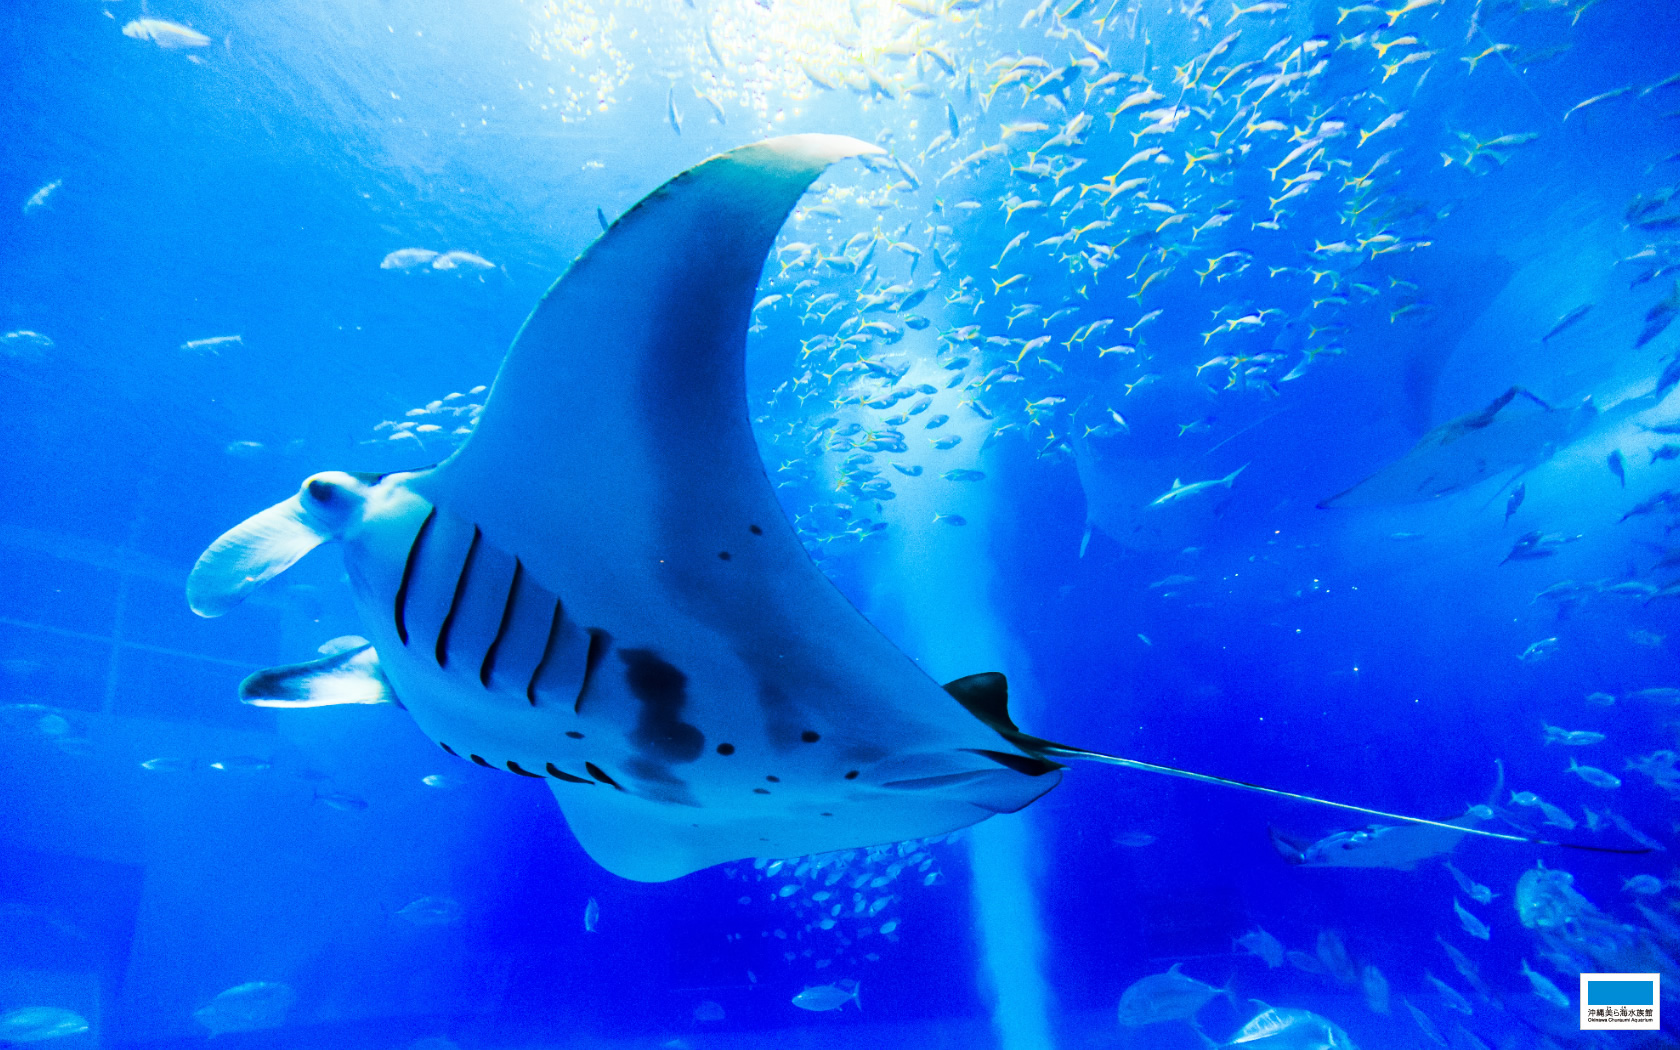 Downloads Okinawa Churaumi Aquarium For The Next Generation To Inherit The Beautiful Seas Of Okinawa